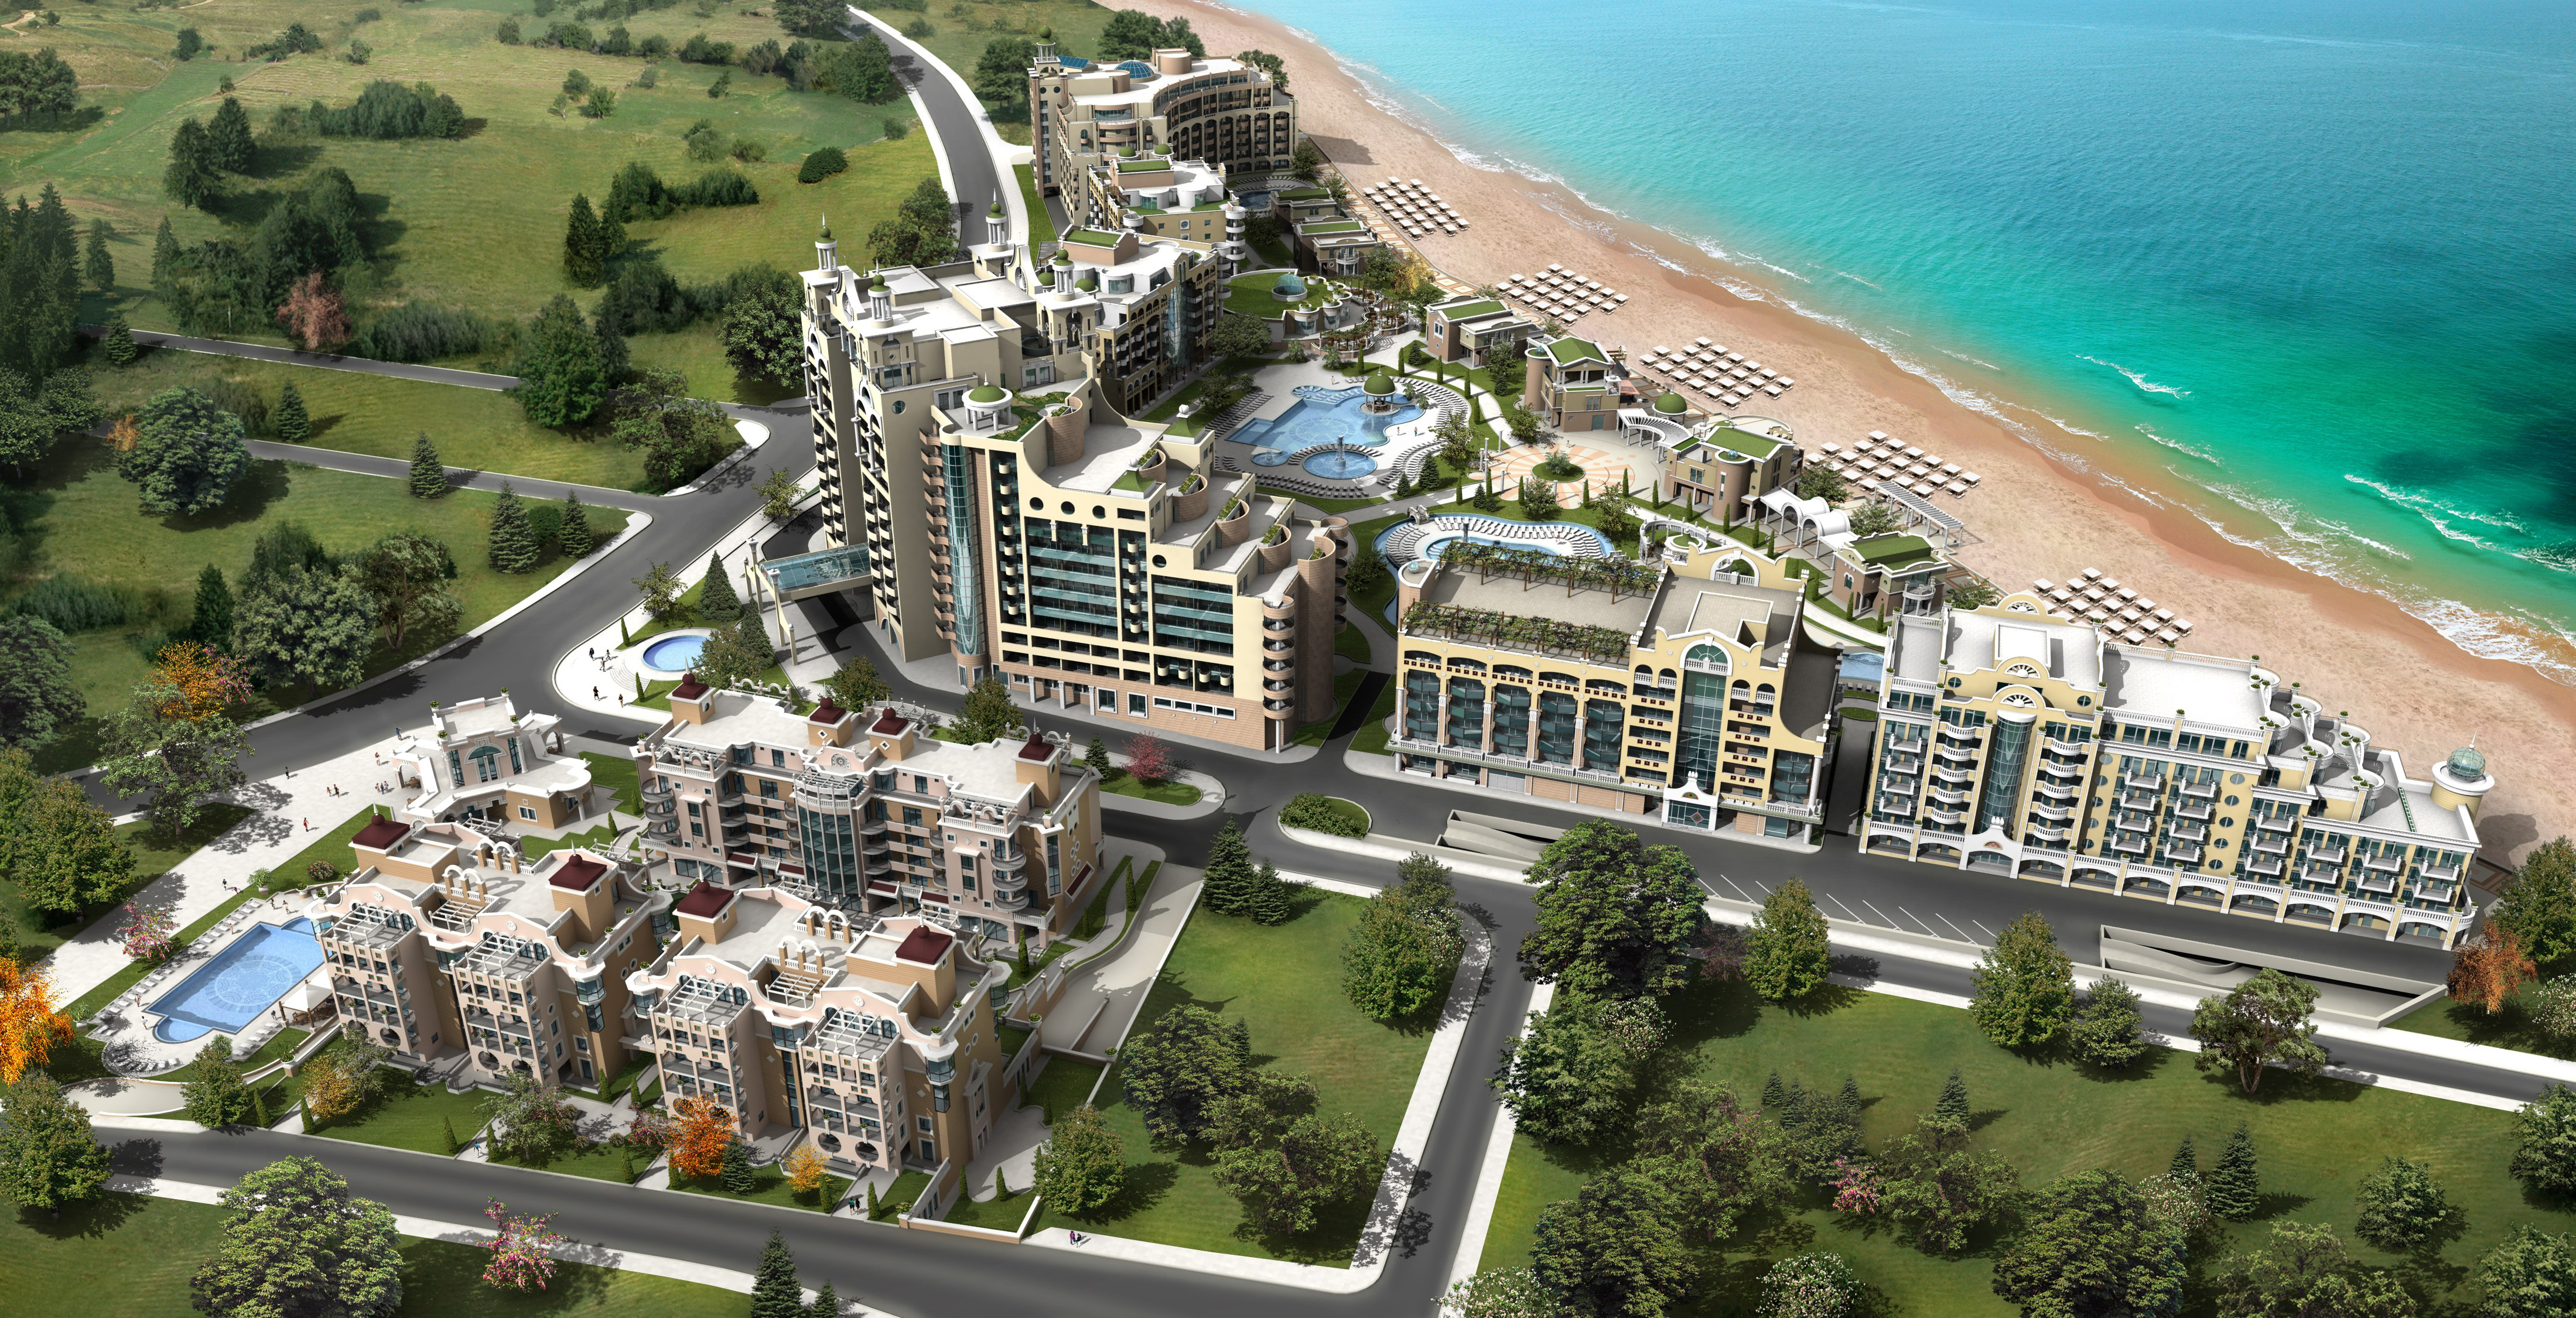 SUNSET Resort phase 2 presented by LNGroup Management Ltd